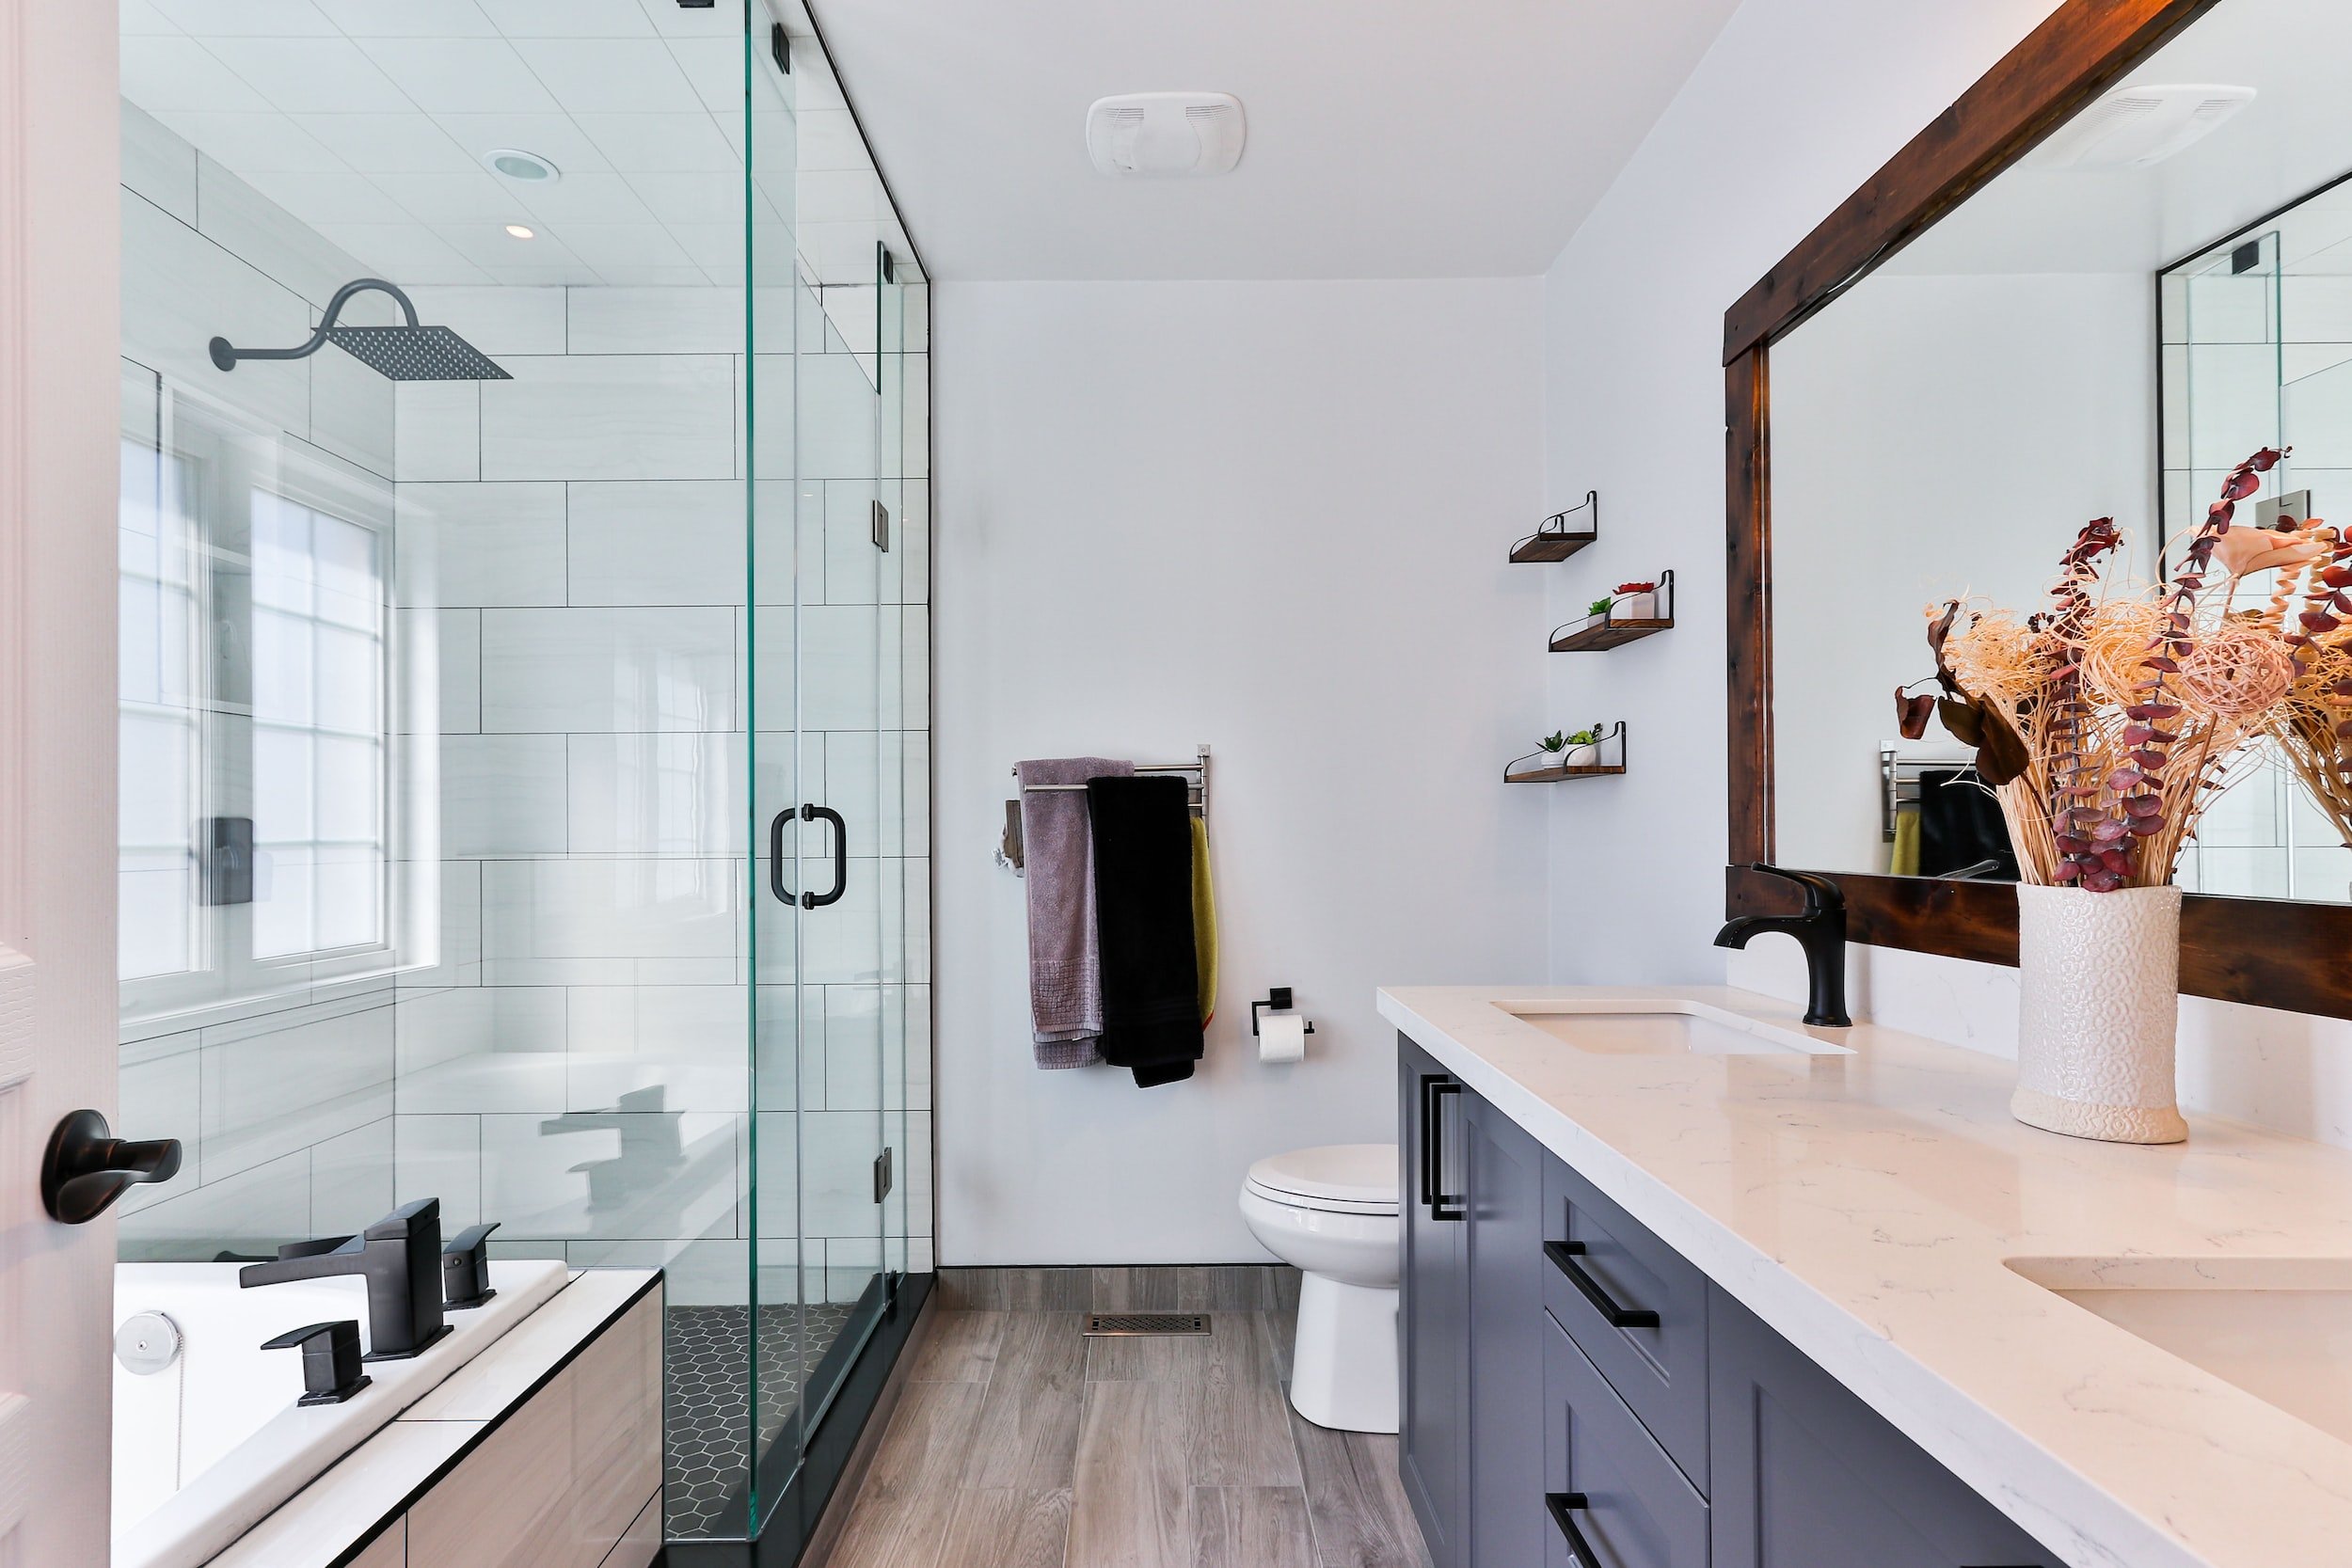 Bathroom<br>bathroom vanity<br>bathroom remodel<br>bathroom vanity with sink<br>bathroom mirrors<br>bathroom light fixtures<br>bathroom rugs<br>bathroom cabinets<br>bathroom sink<br>bathroom accessories